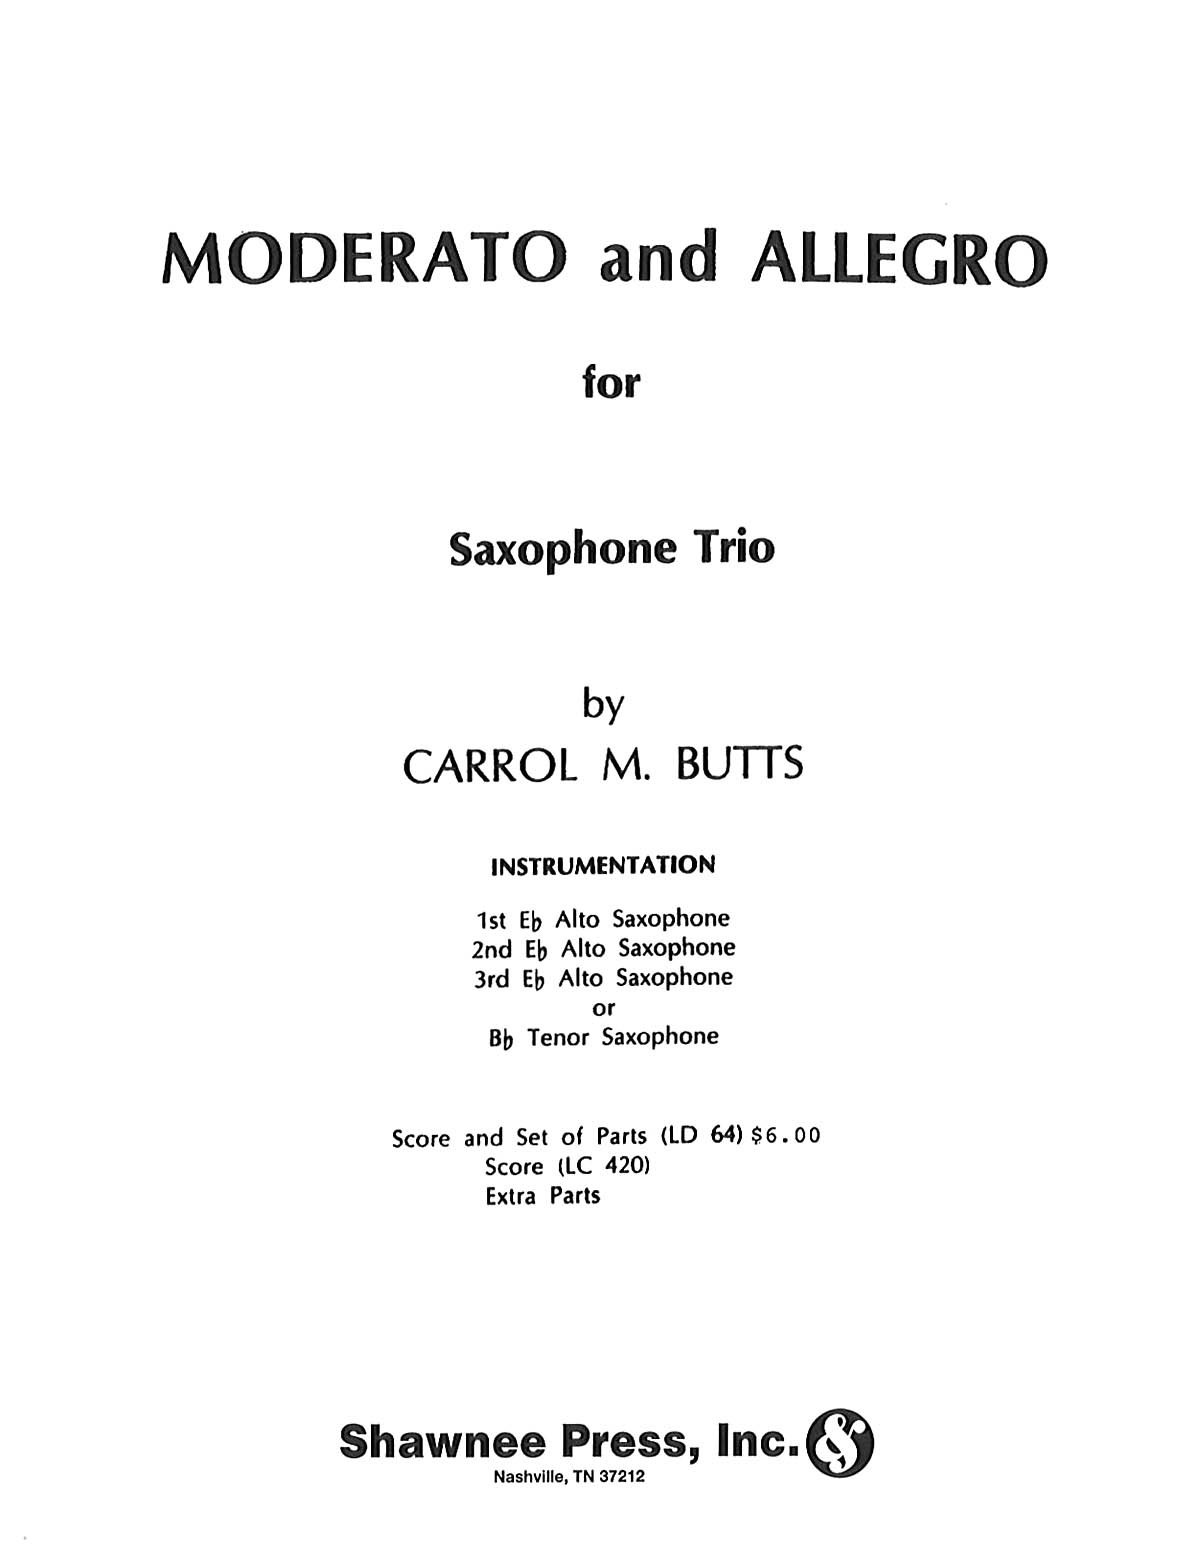 Moderato and Allegro Saxophone Trio: Part